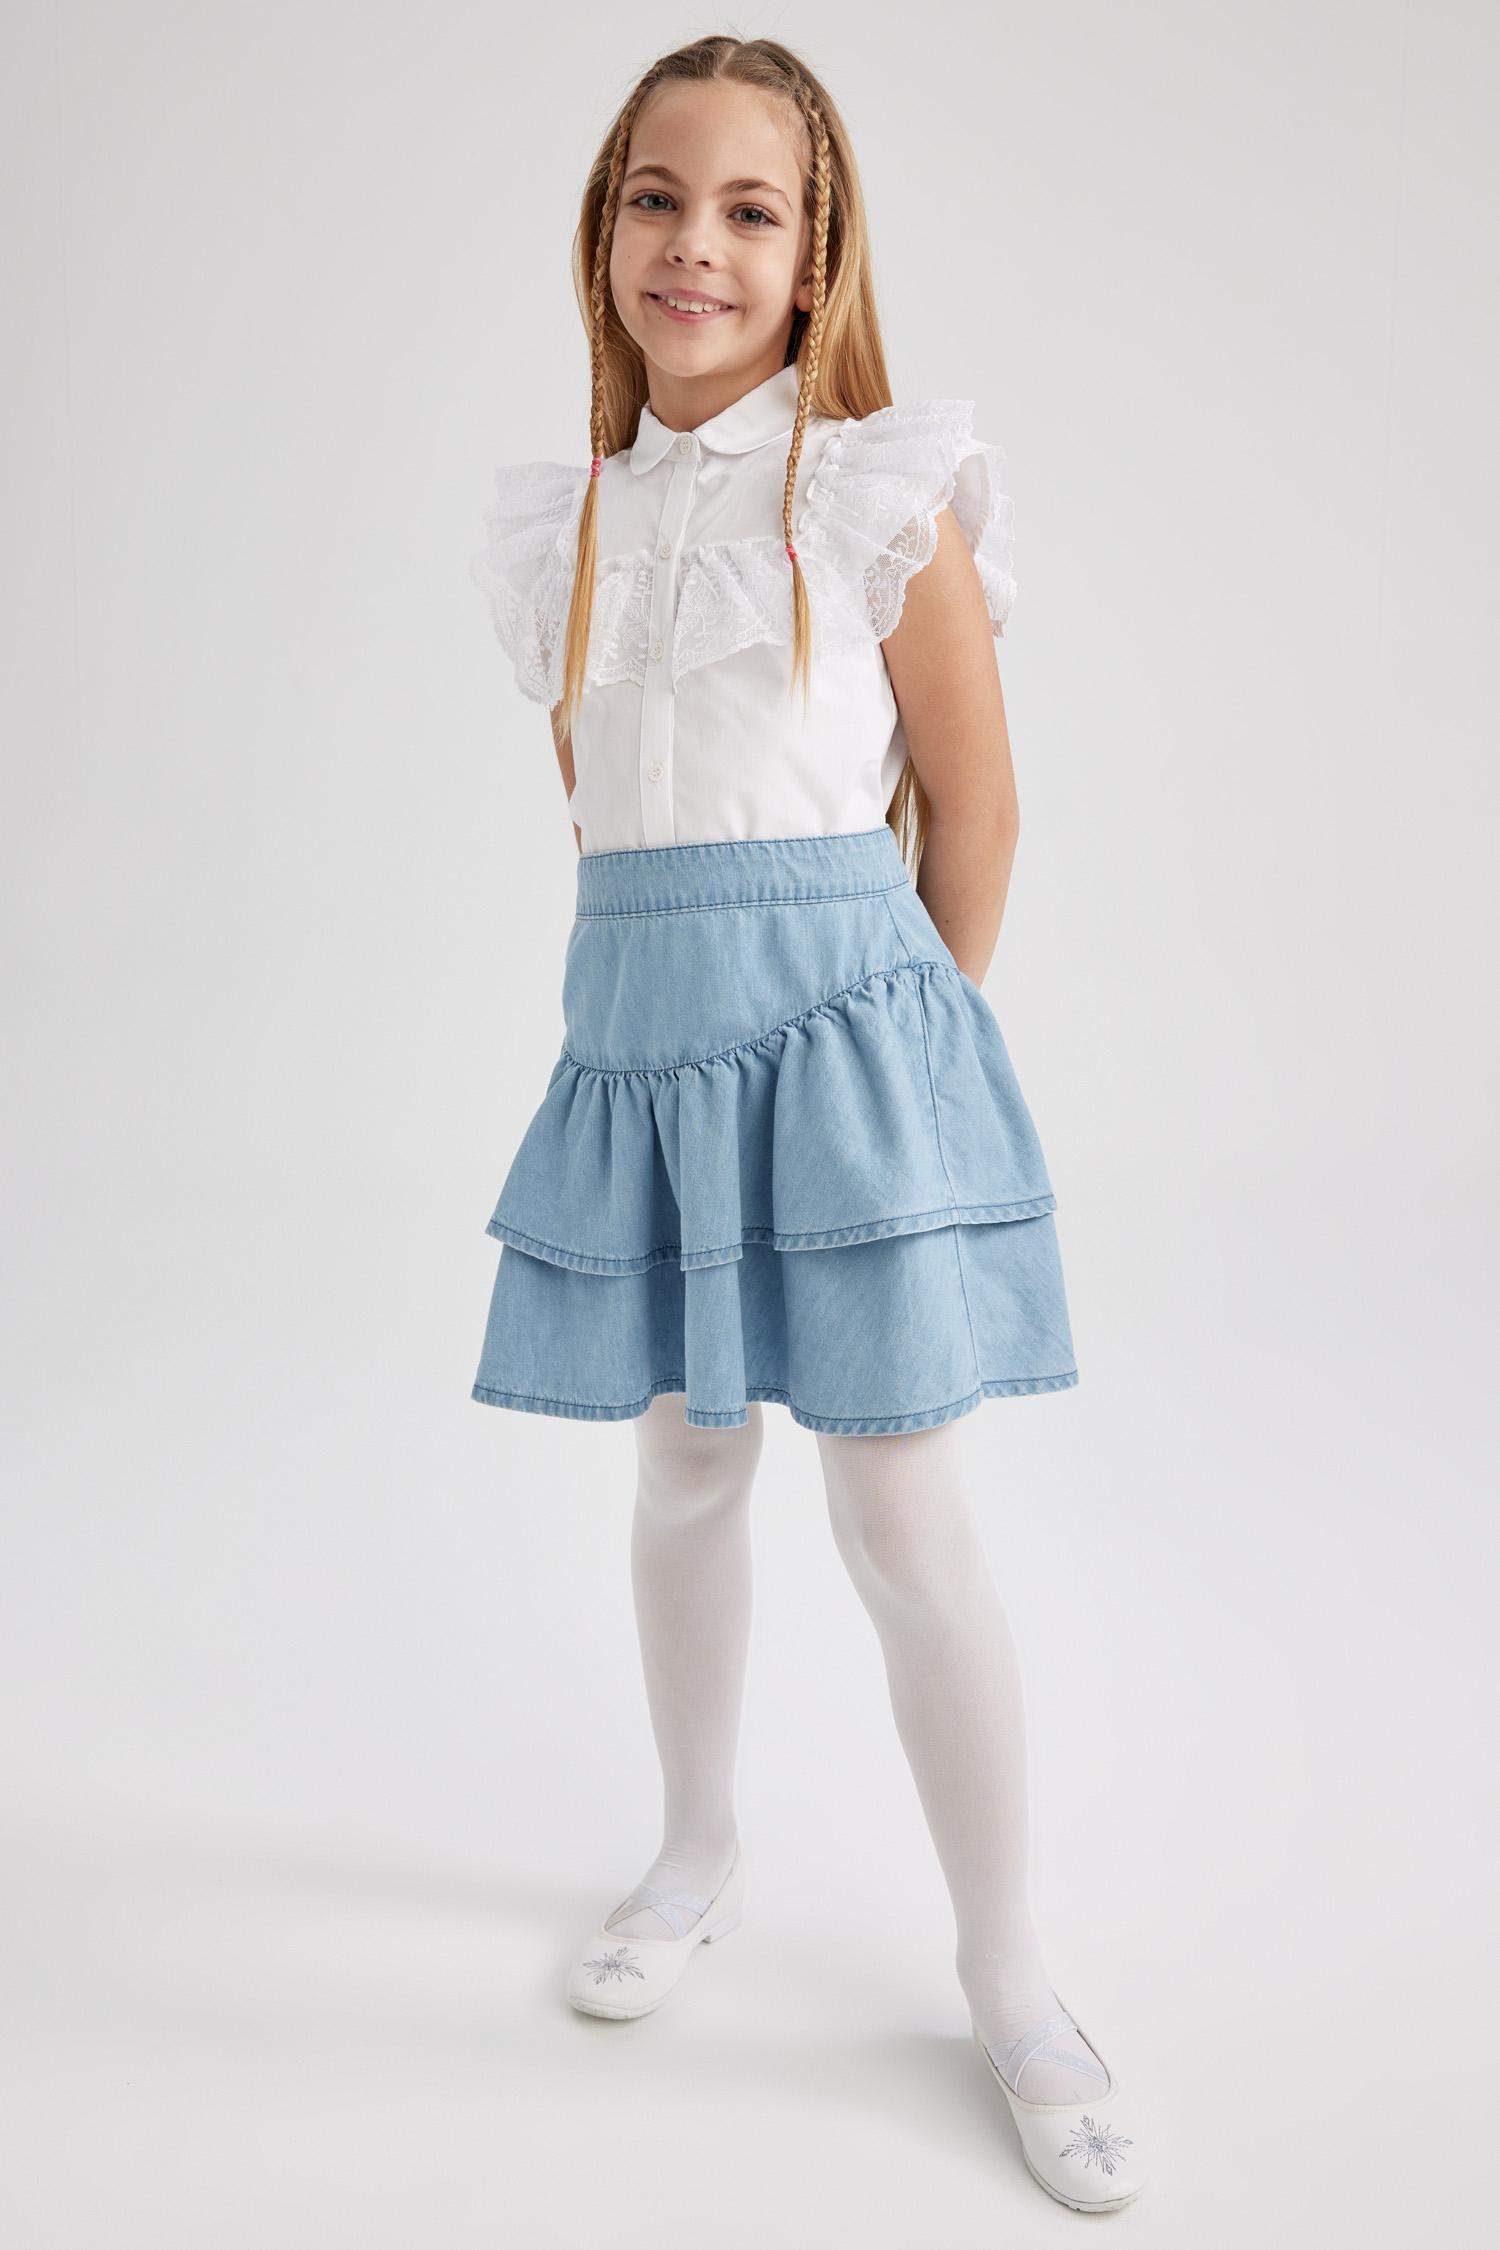 Rarjuiey Toddler Baby Girls Denim Skirts Ruffle Mini Skirt High Waist Slim  Pleated Jeans Tutu Dress Summer A-line Clothing (US, Age, 6 Months, 12  Months, Corduroy Brown) - Yahoo Shopping